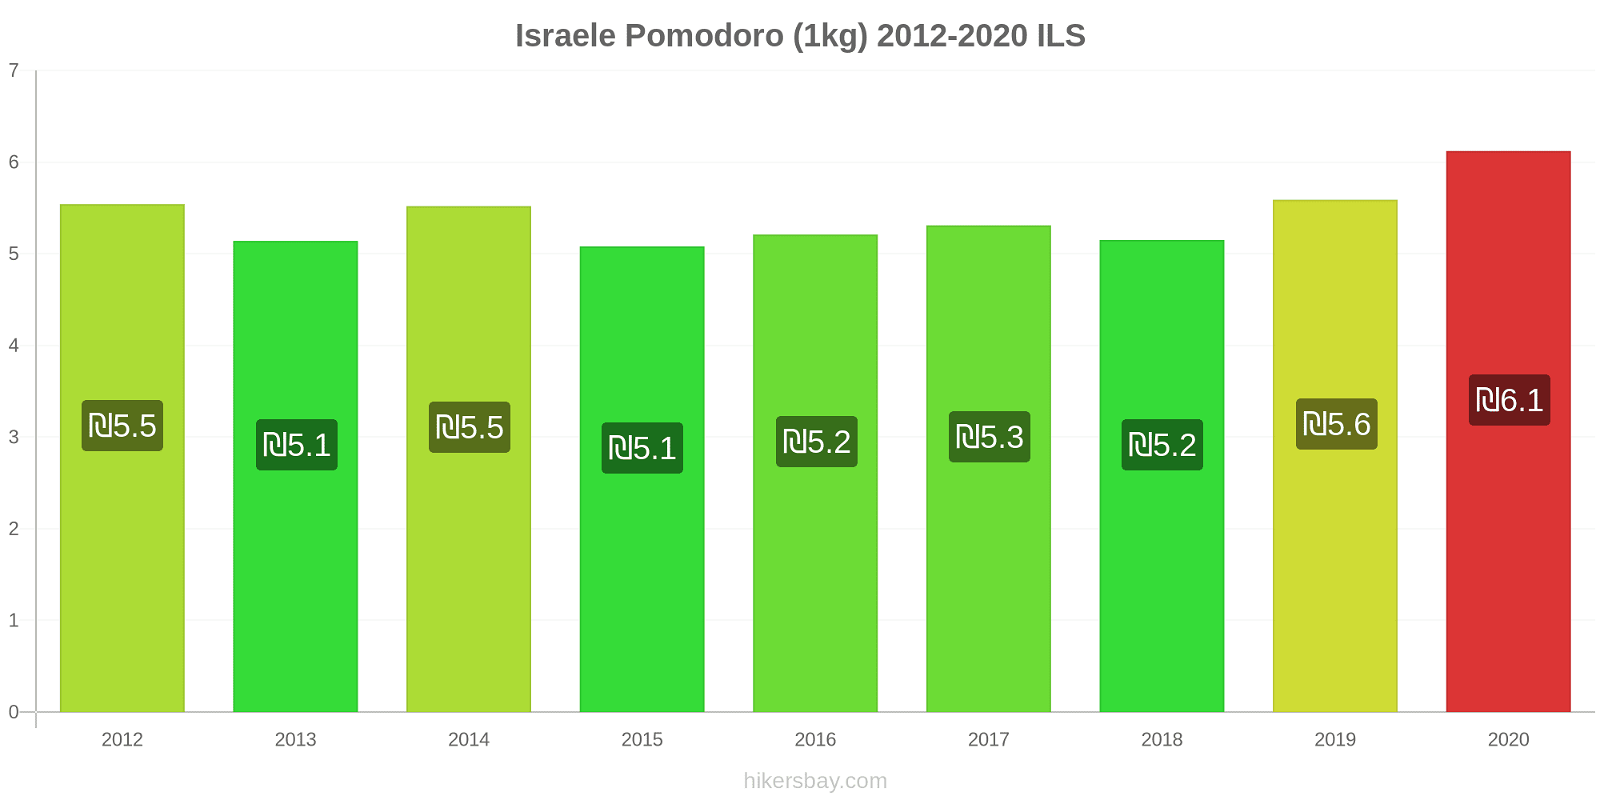 Israele variazioni di prezzo Pomodoro (1kg) hikersbay.com